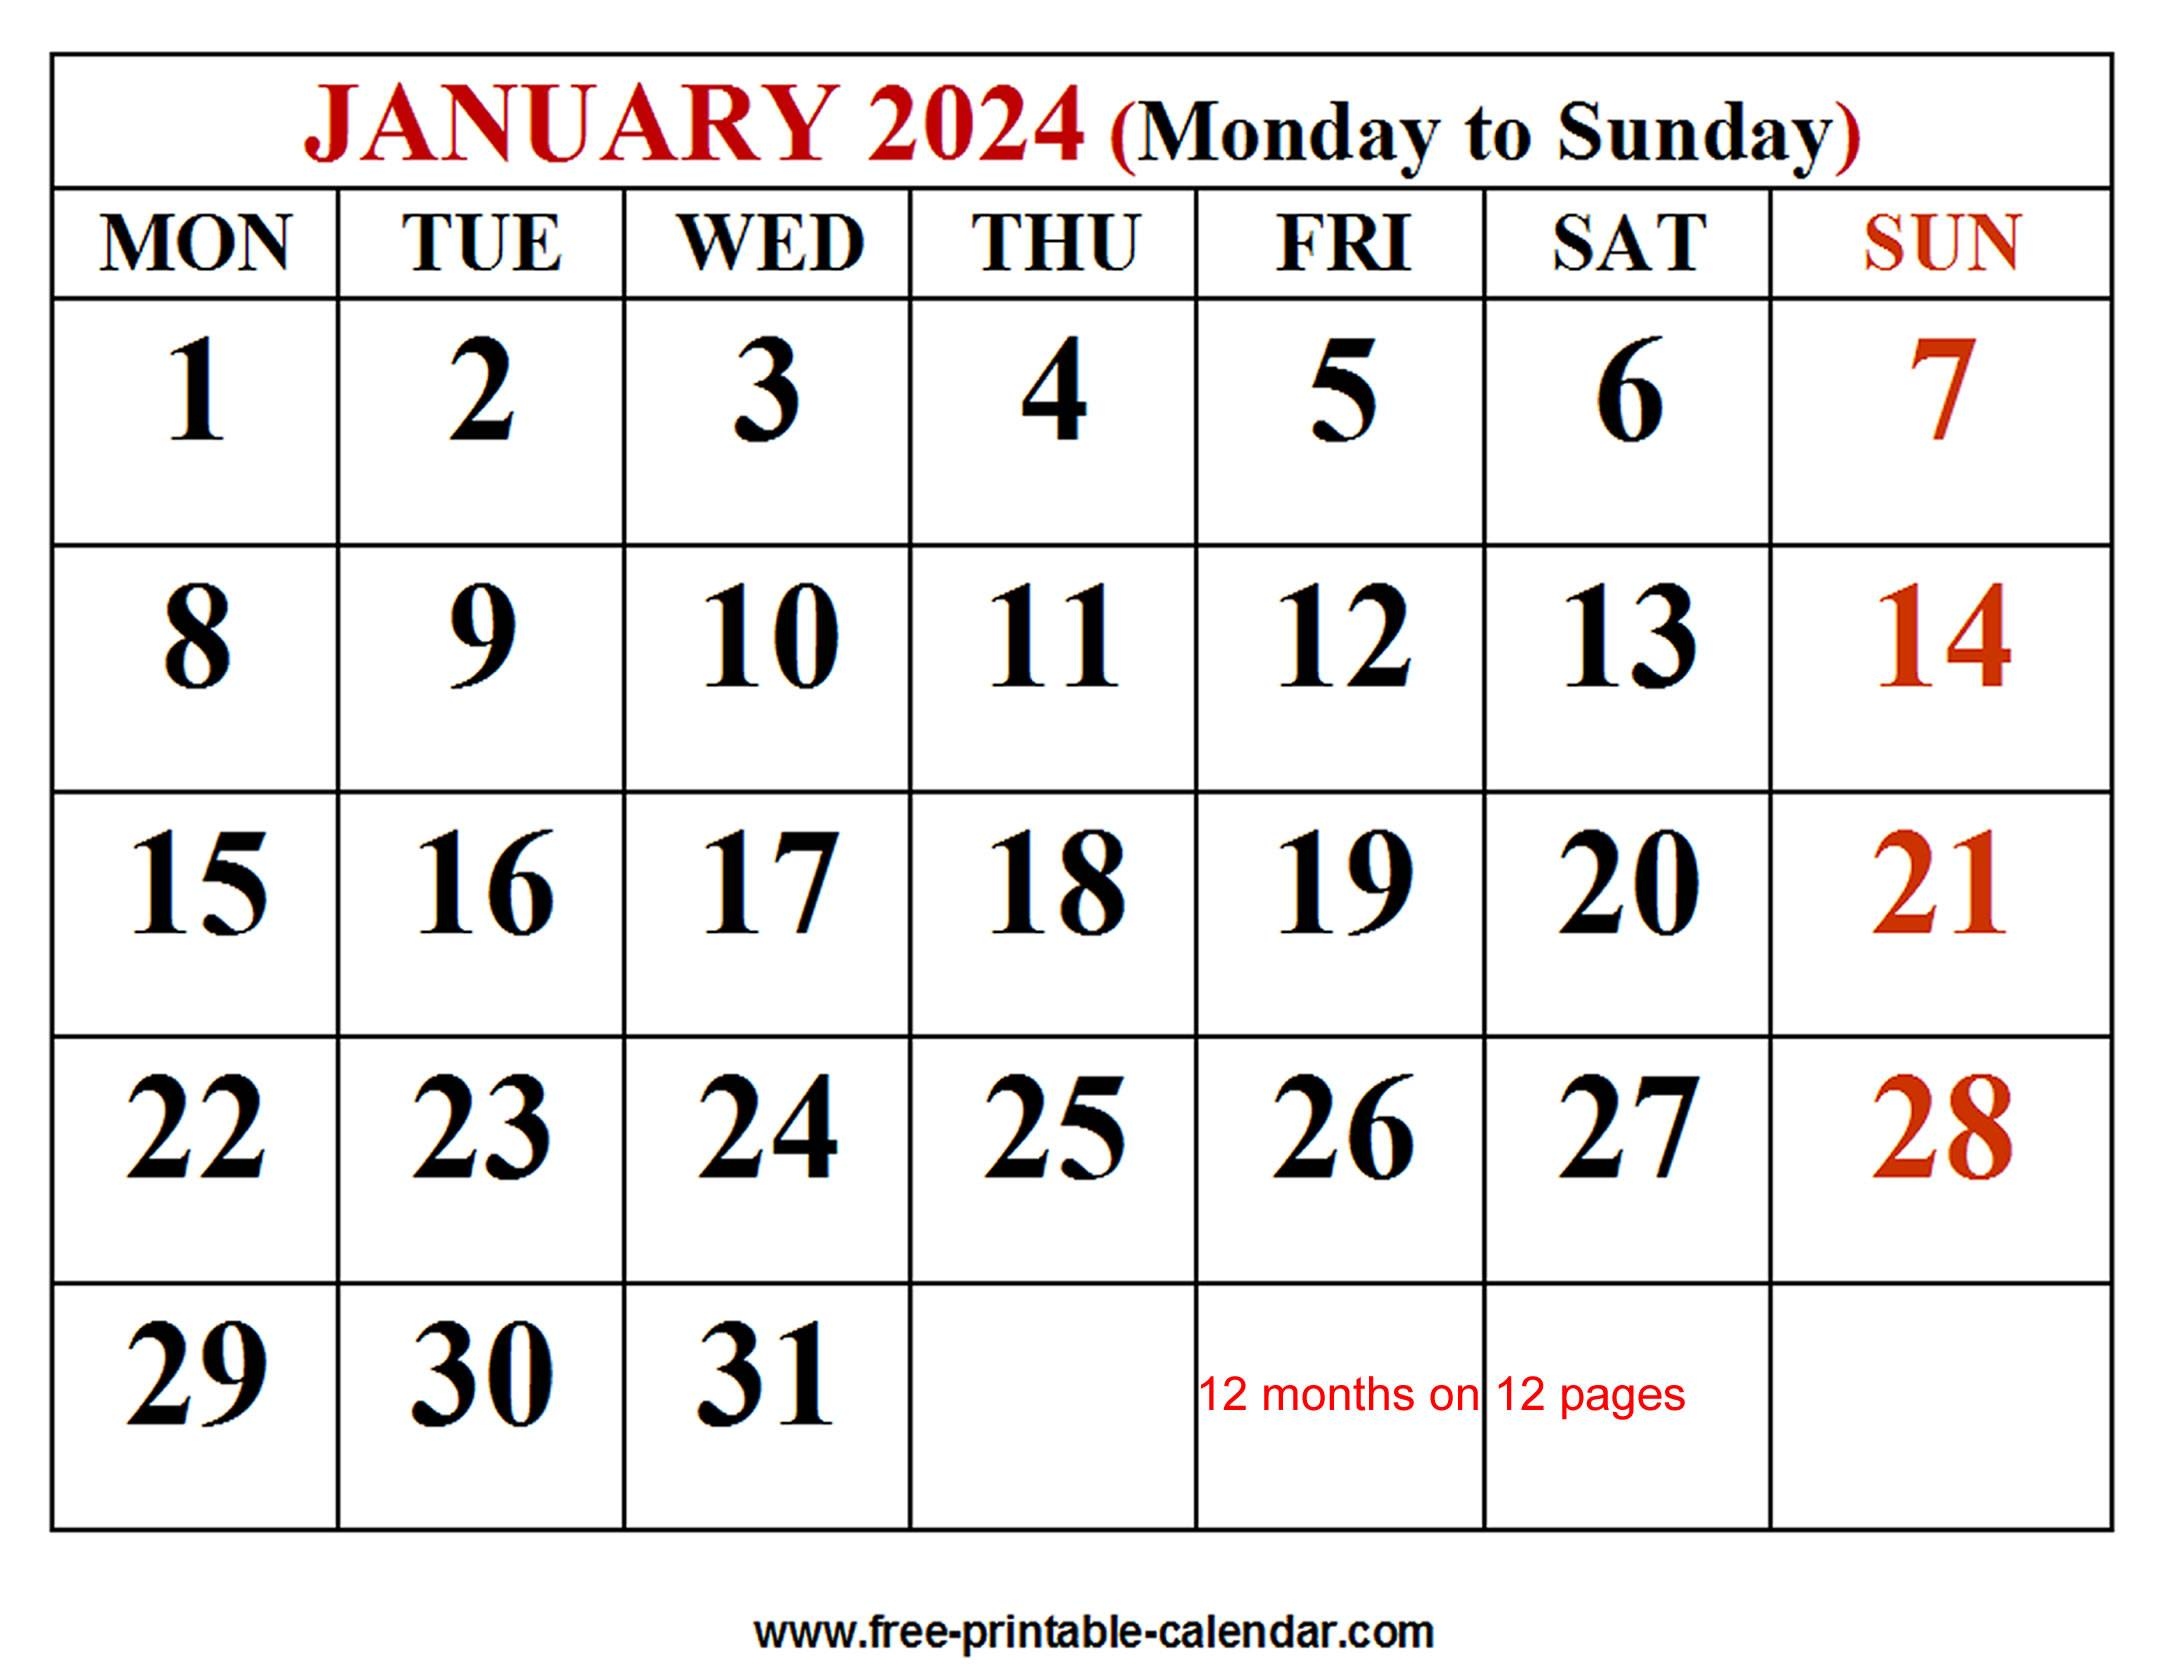 2024 Calendar Template - Free-Printable-Calendar pertaining to Free Printable Calendar 2024 2 Months Per Page With Holidays